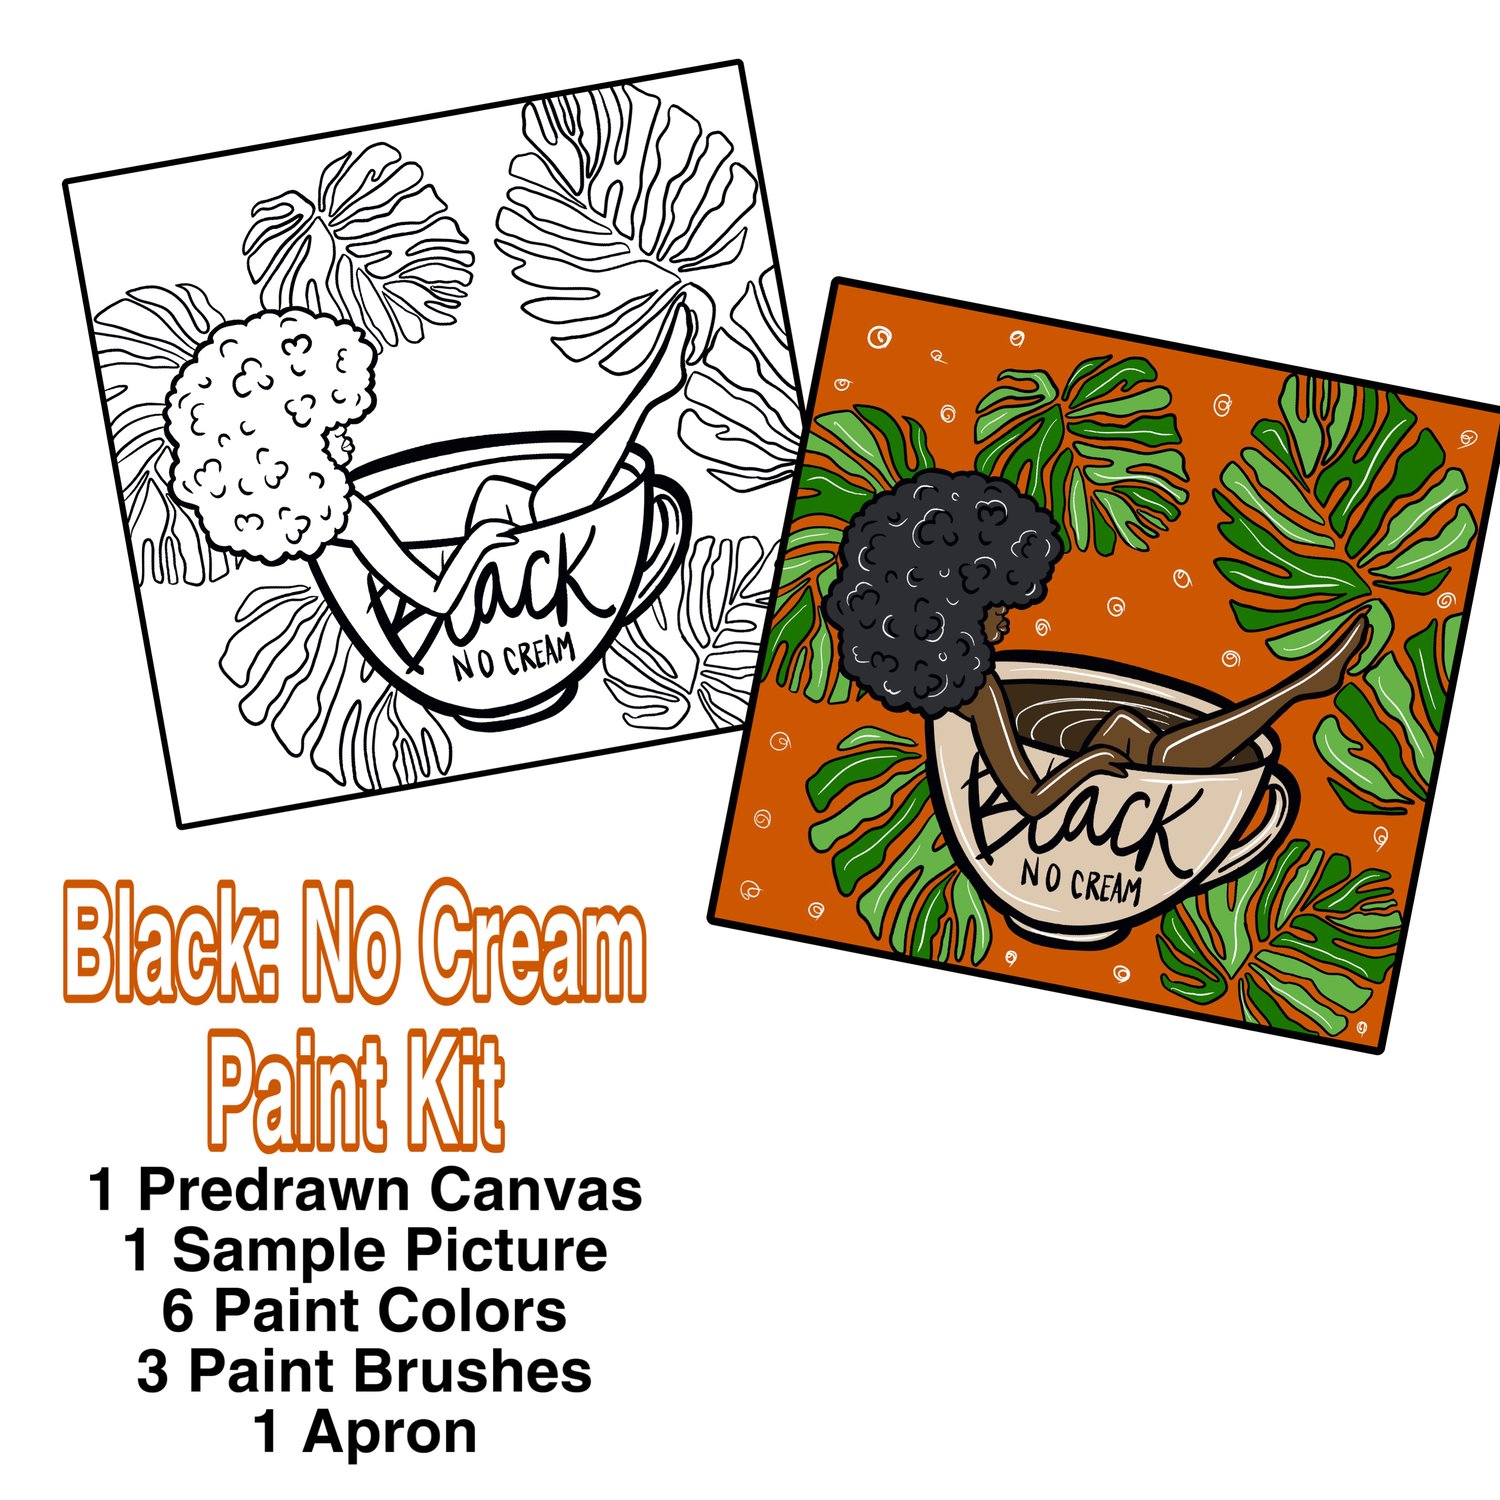 Black No Cream Paint Kit